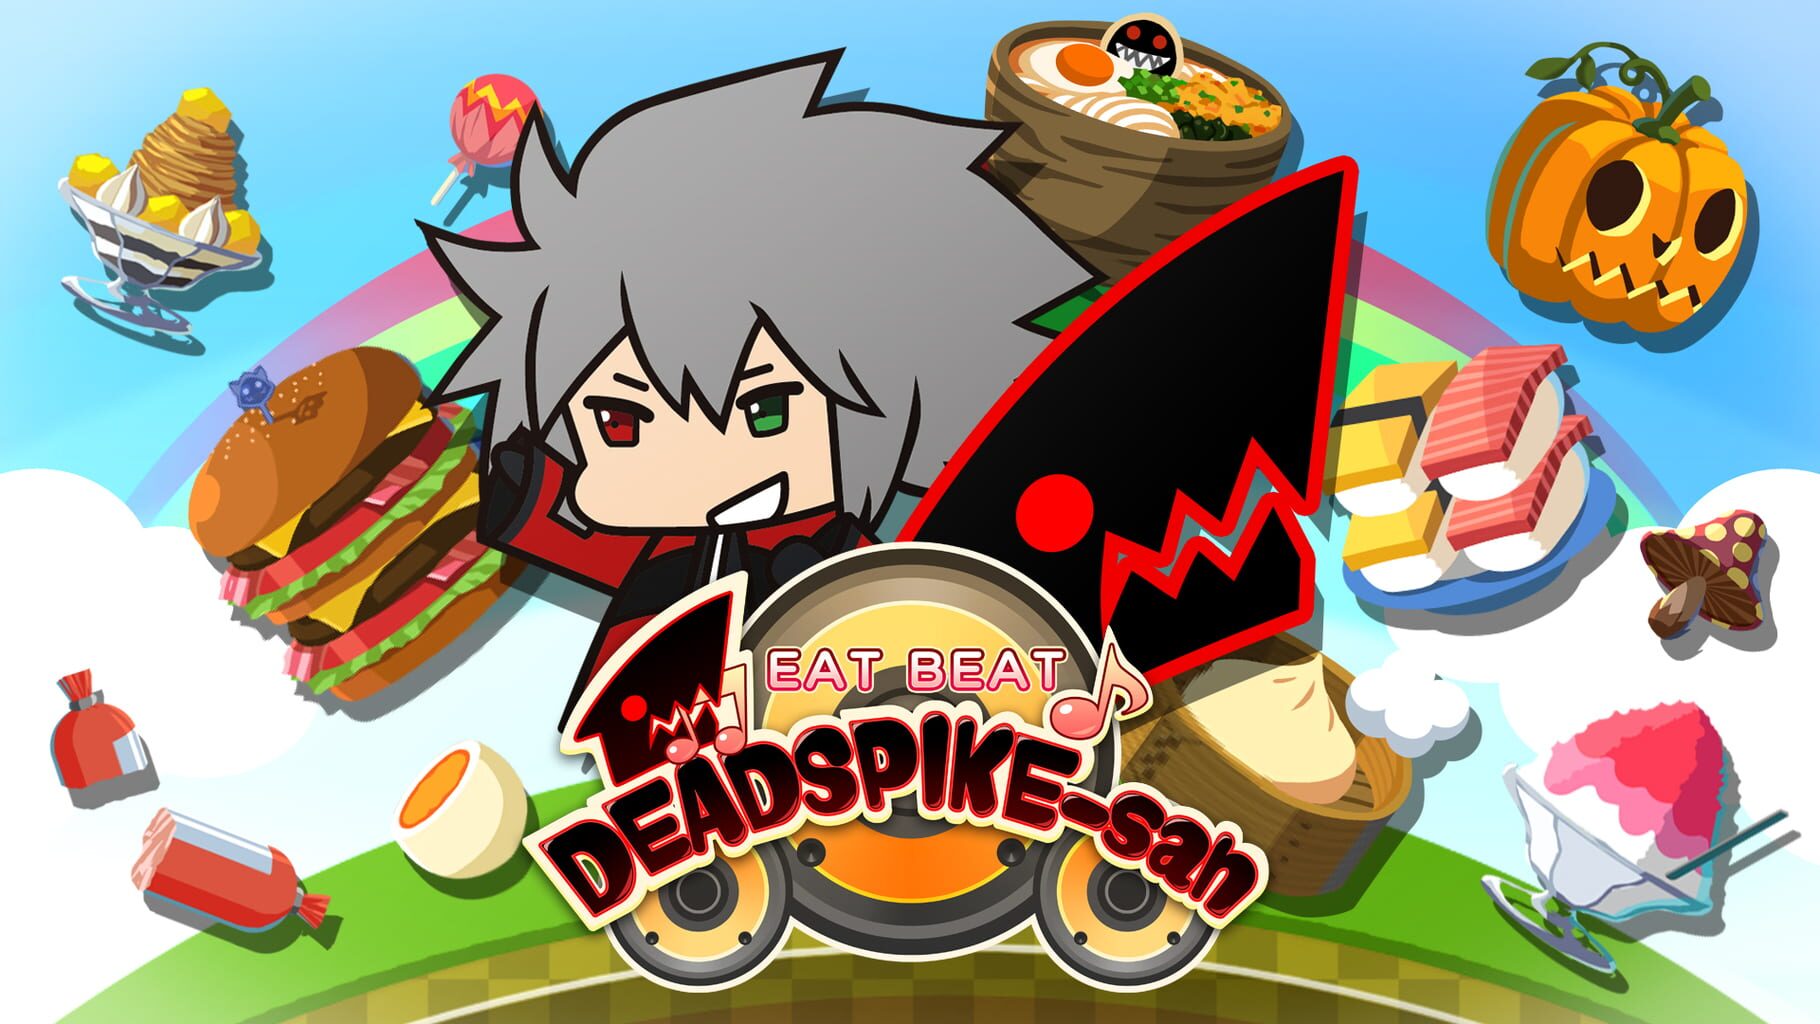 Eat Beat: Dead Spike-san artwork